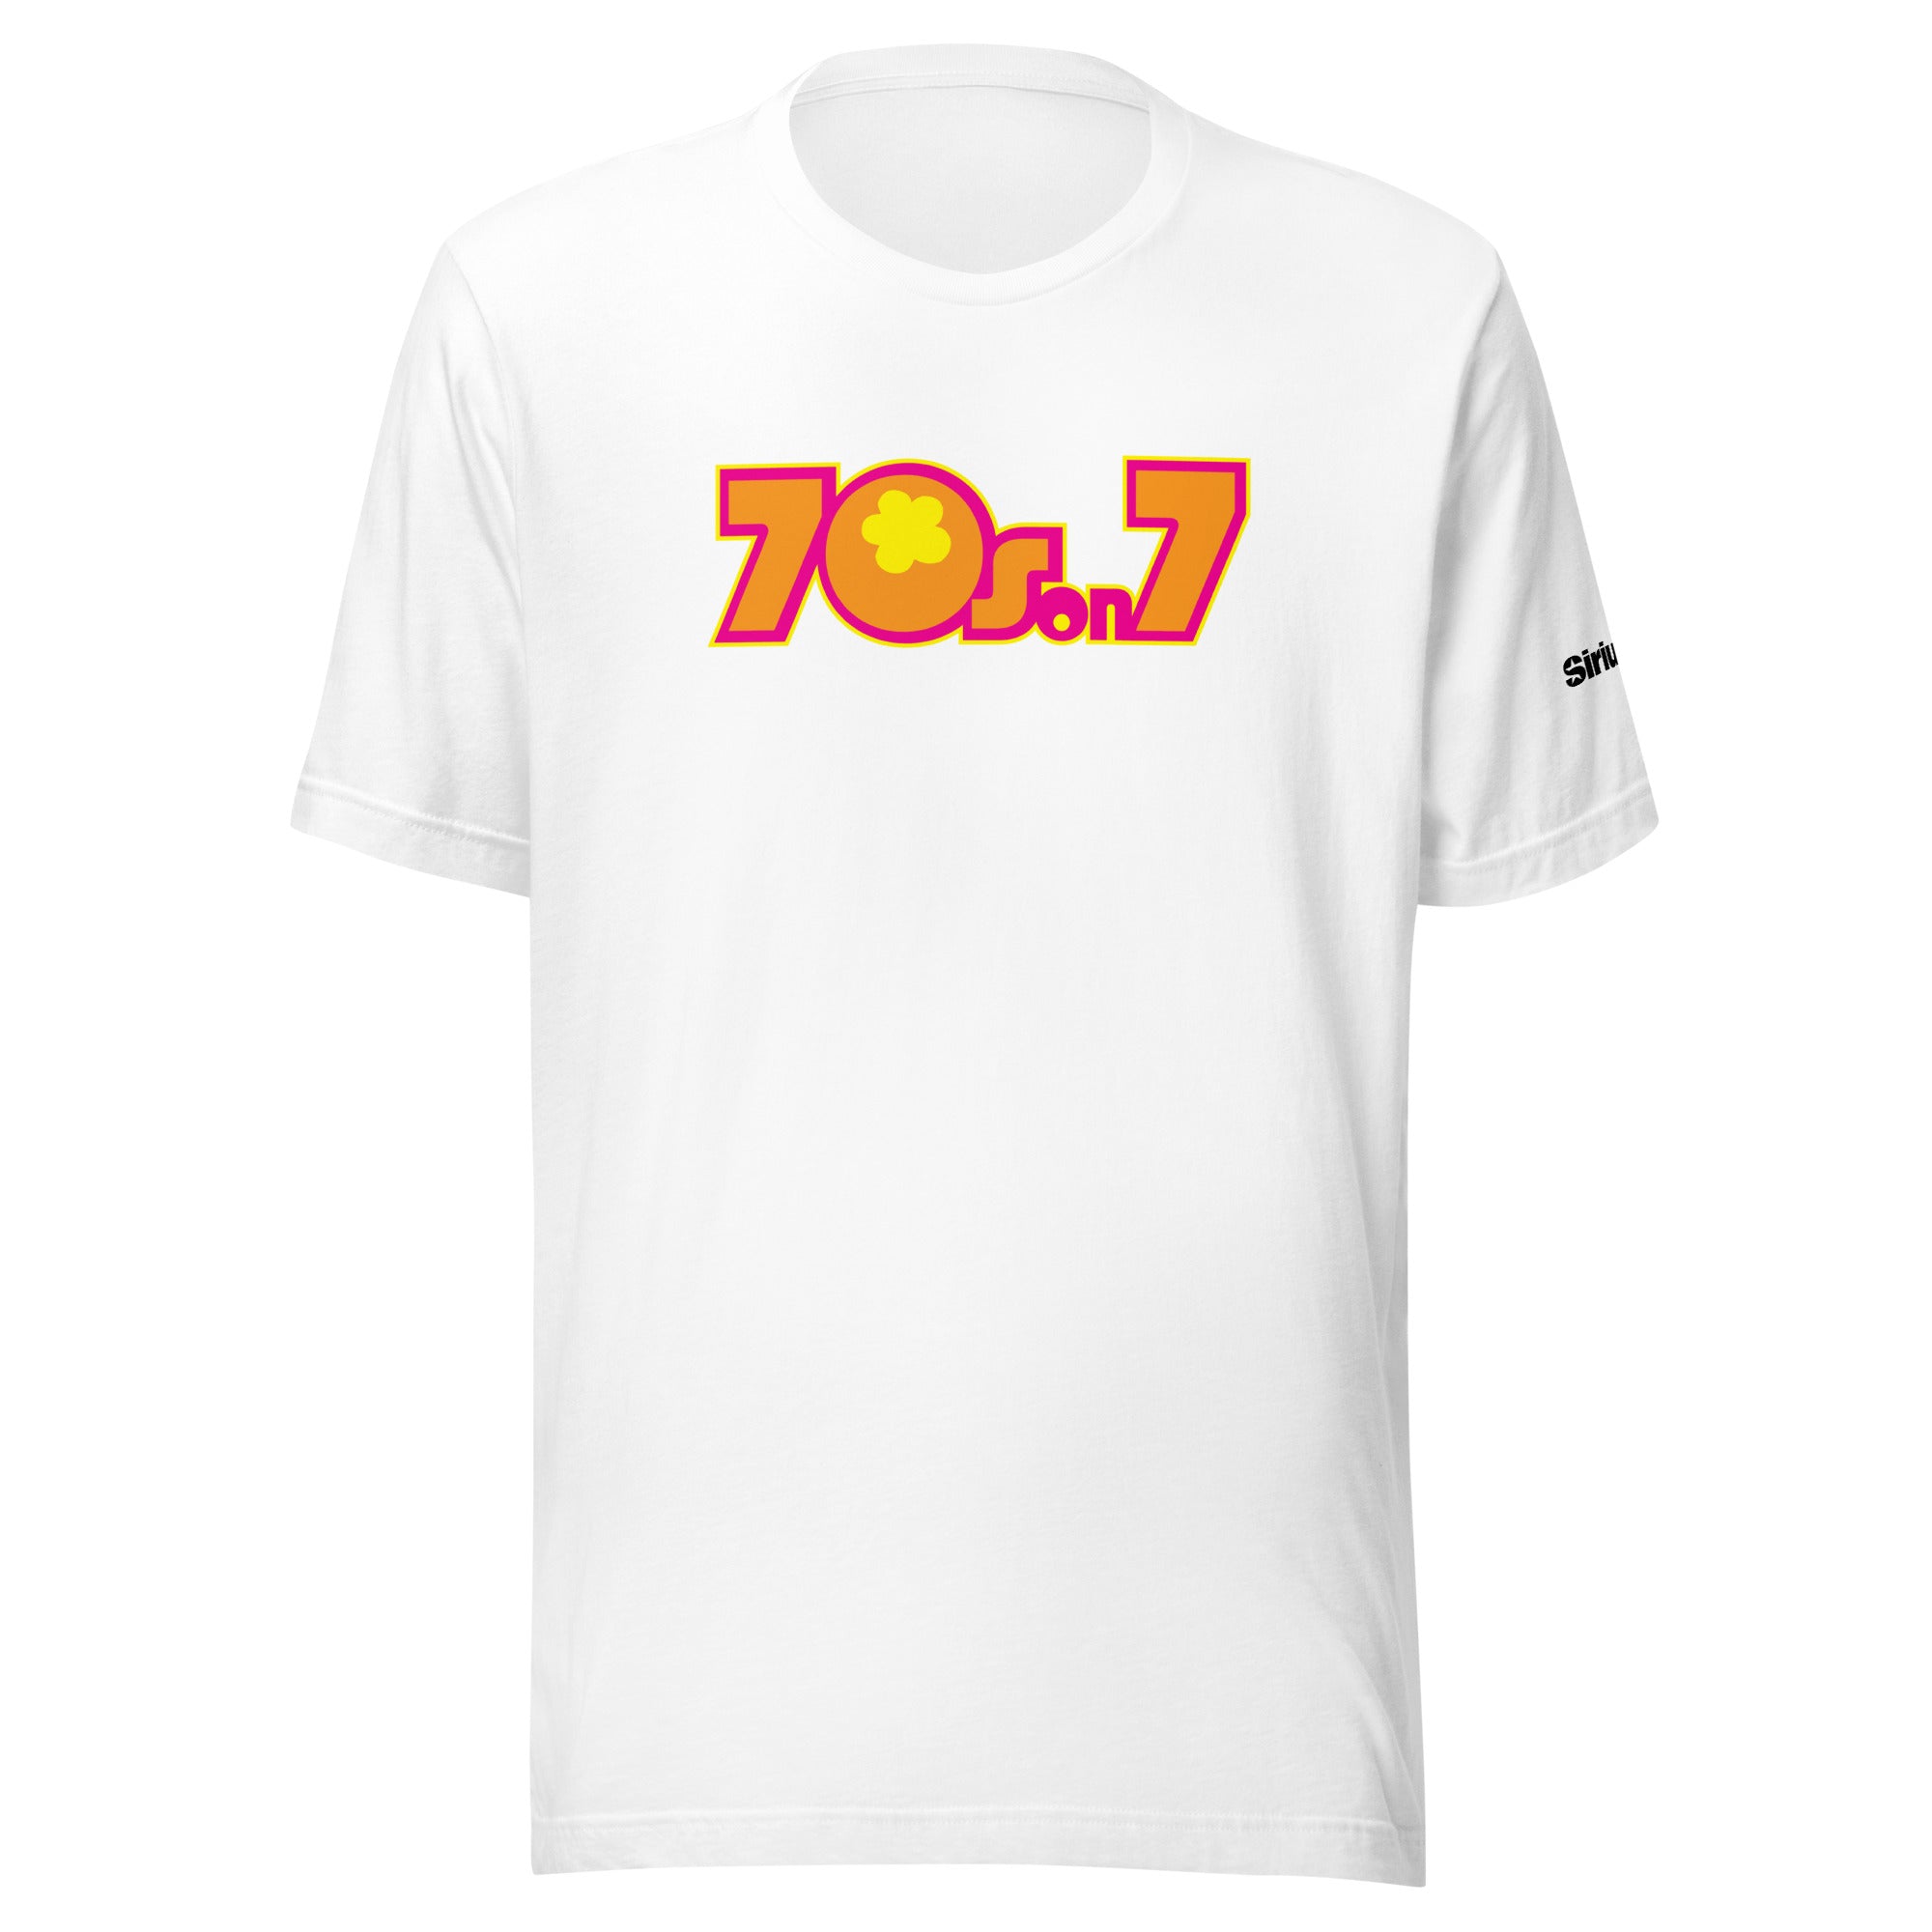 70s on 7: T-shirt (White)